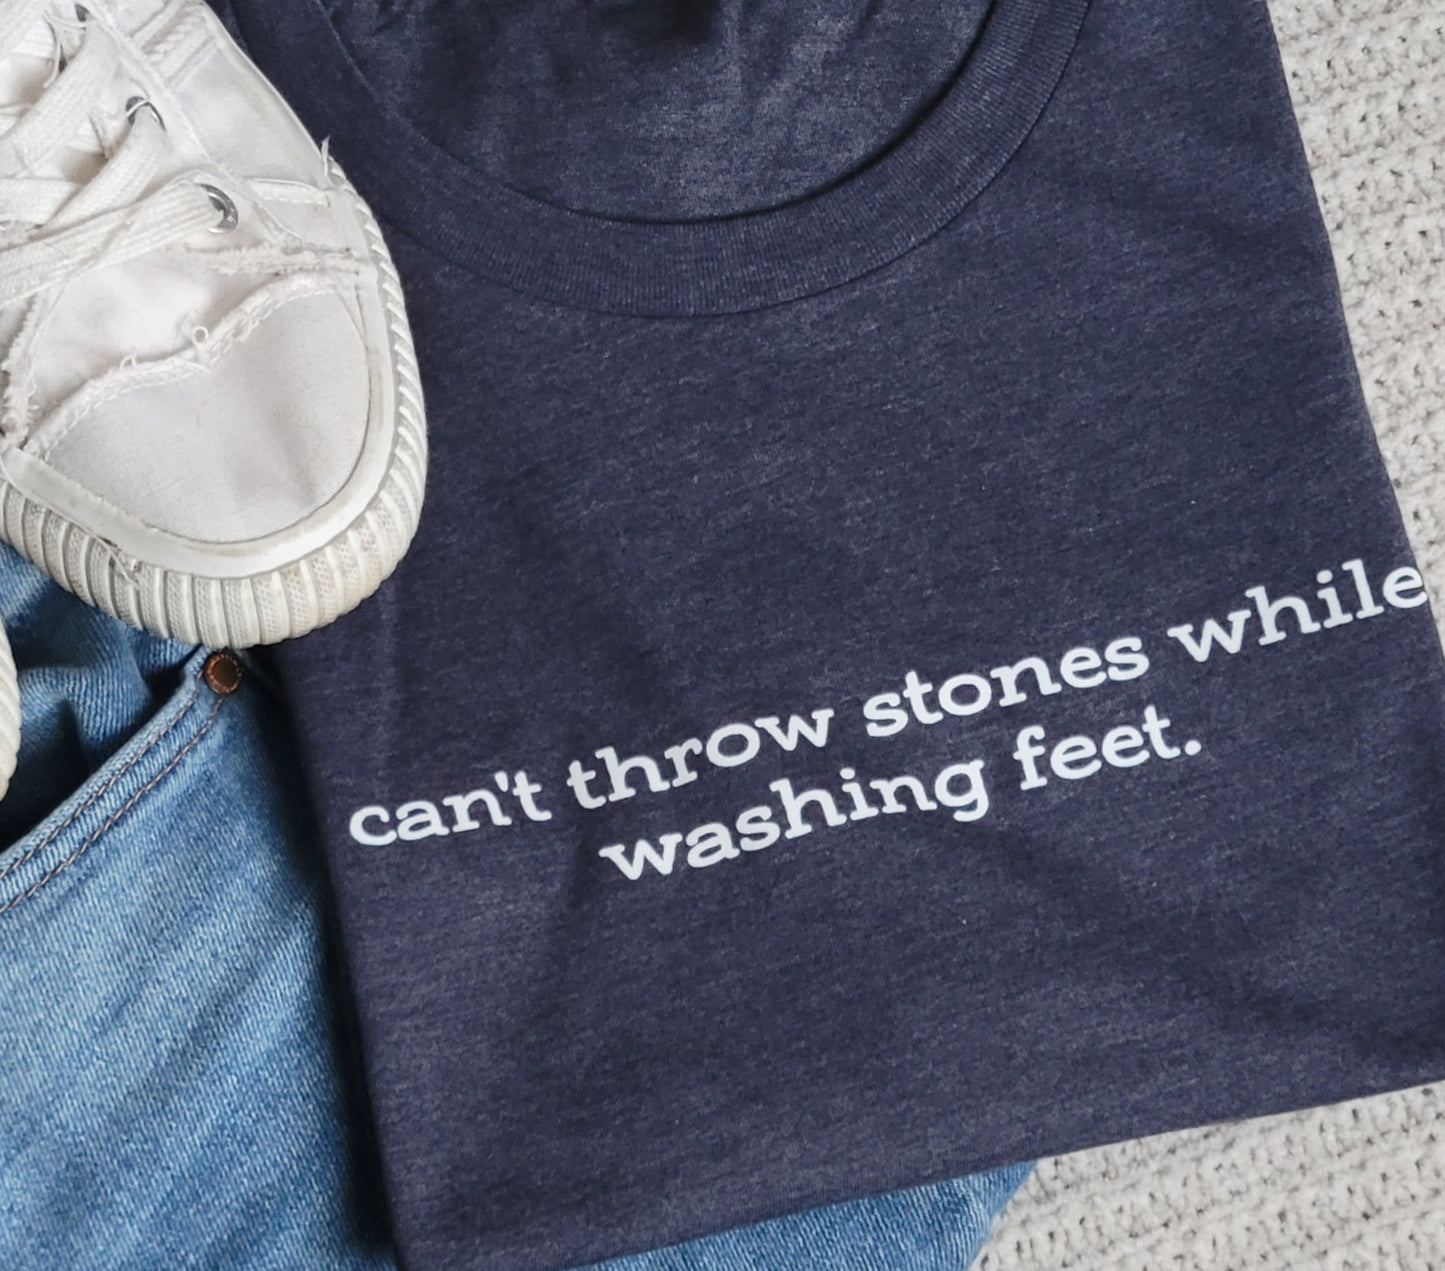 Can't Throw Stones While Washing Feet Inspirational Women's Crew Neck Sweatshirt